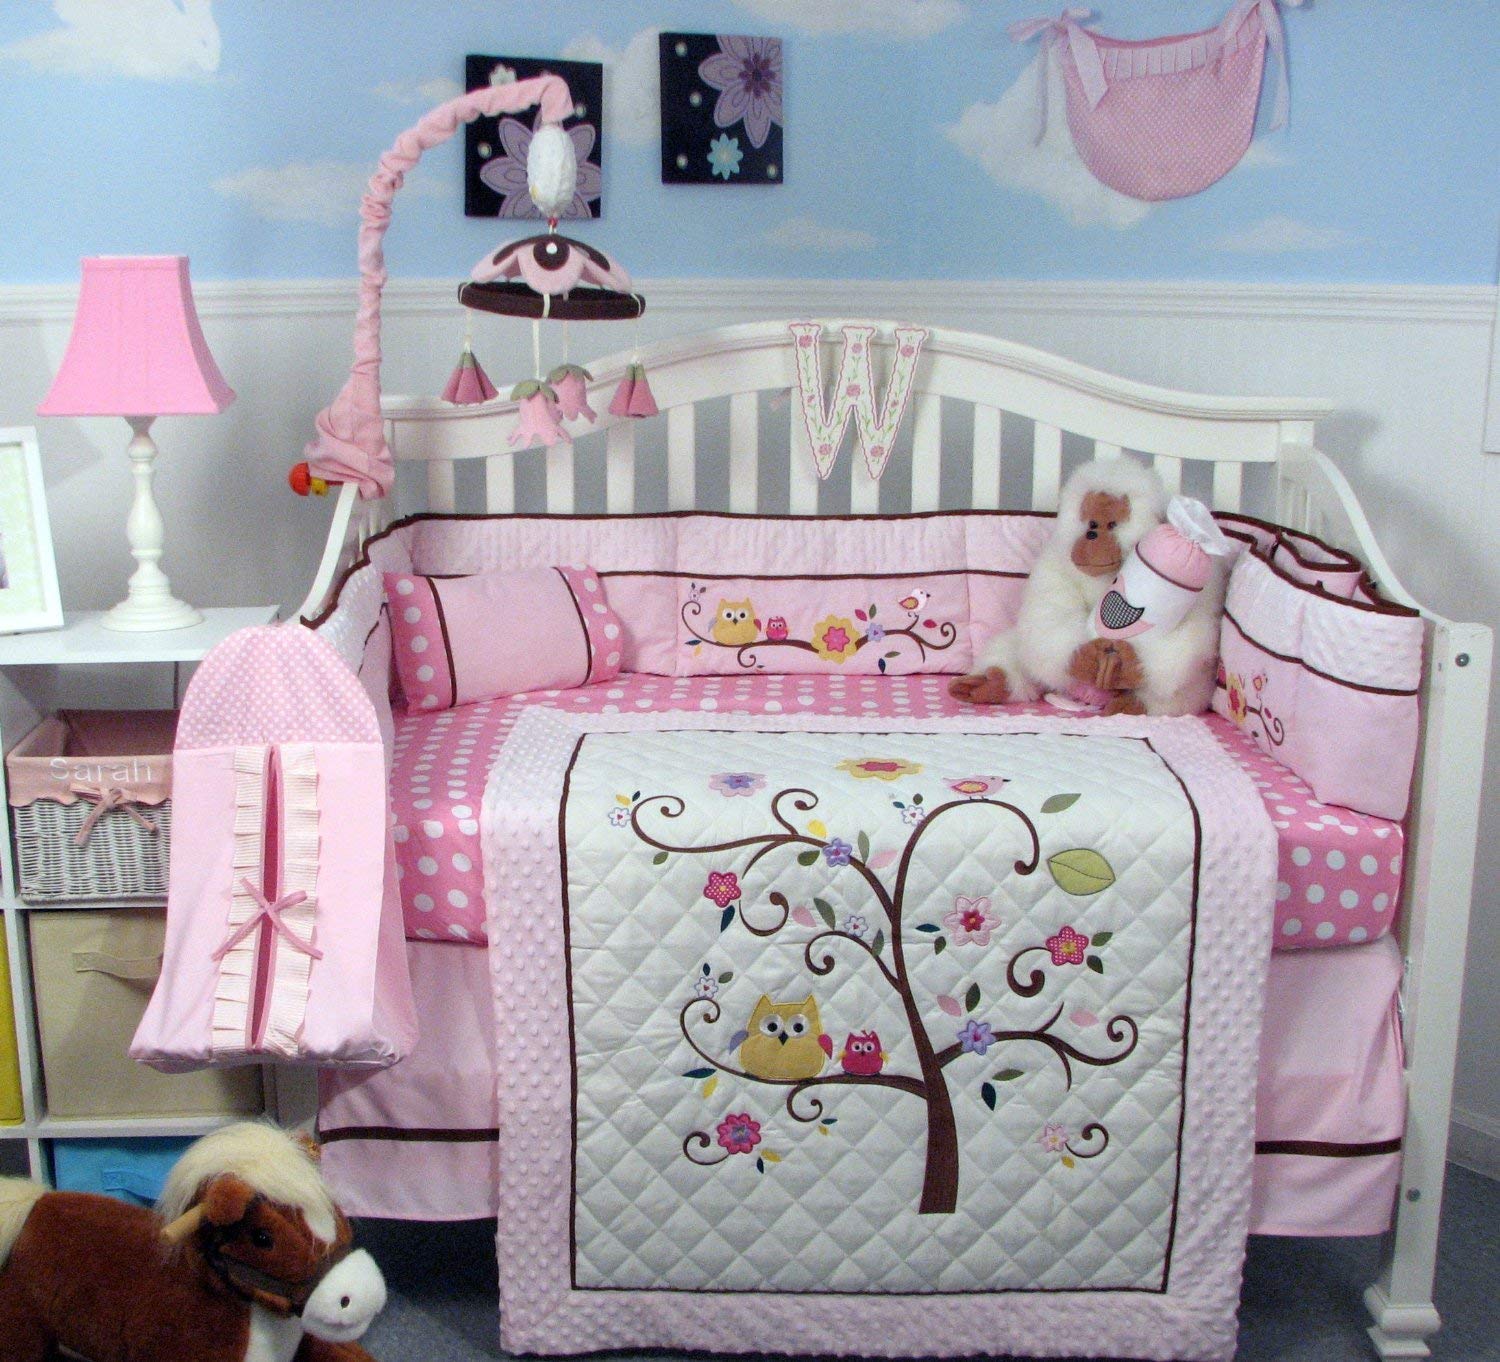 Children's bedding sets amazon.com: Soho Cherry Blossom Crib children's bedding set including diaper NIDZBLG